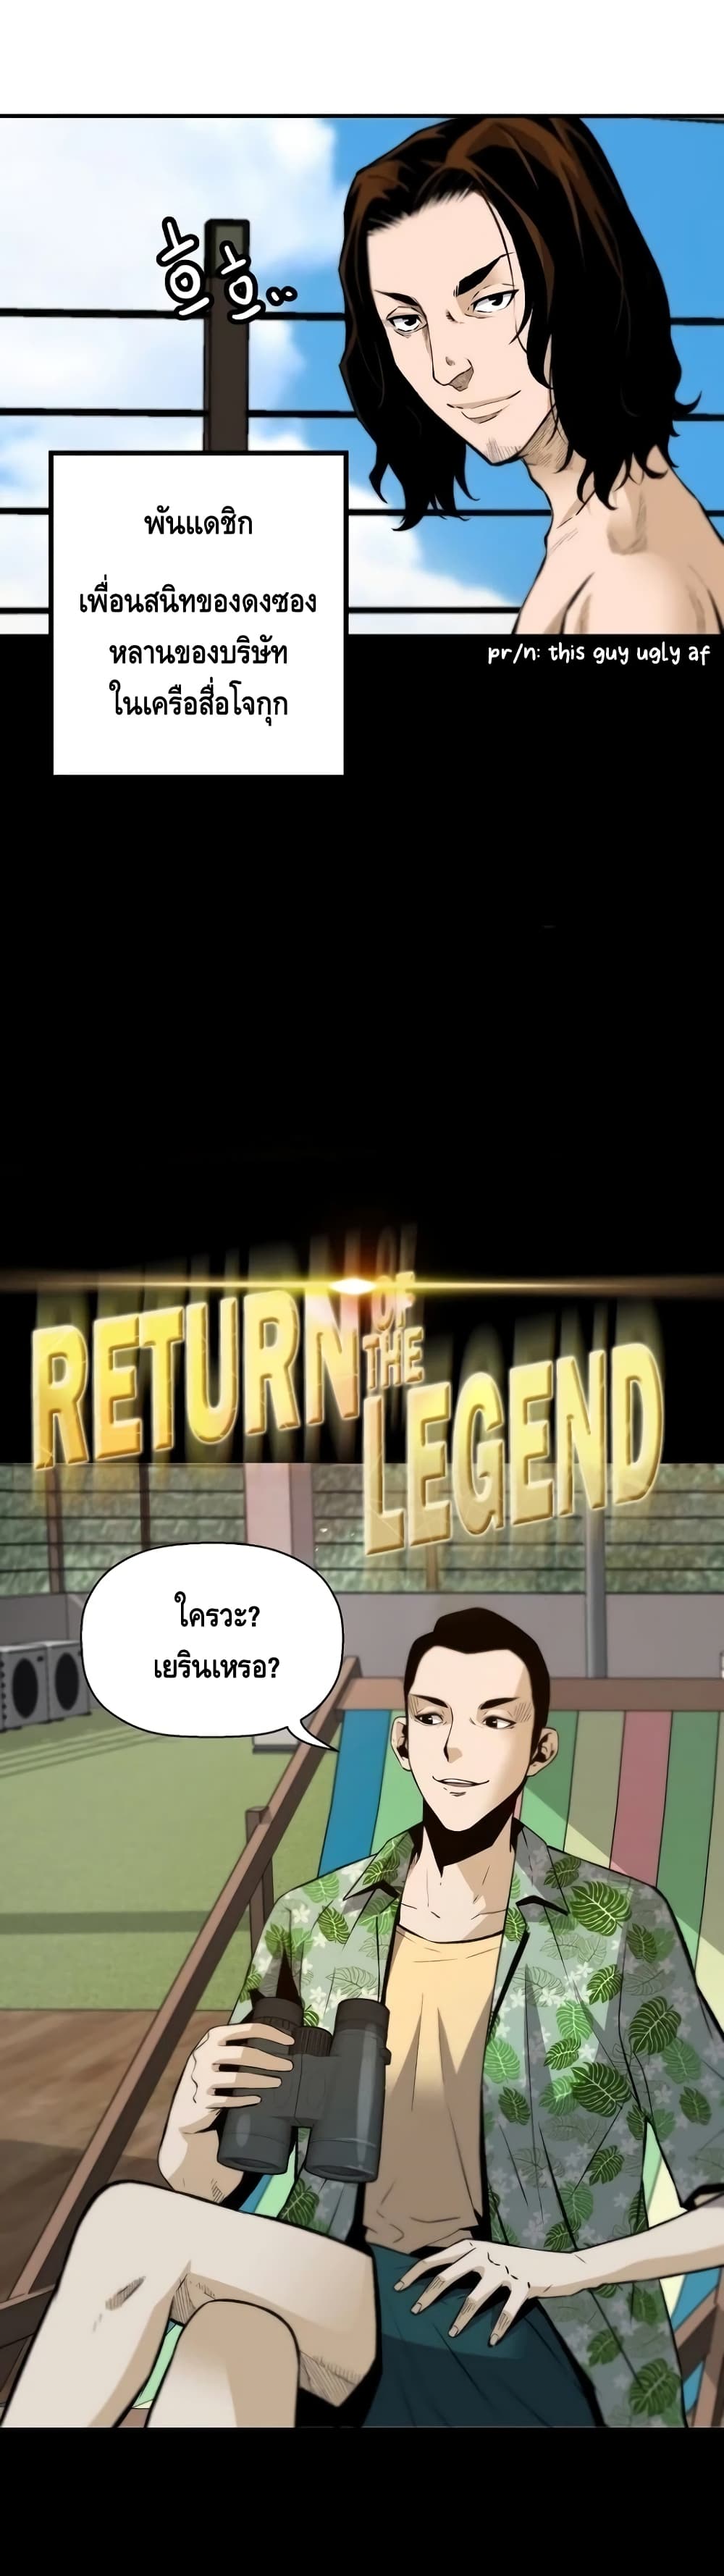 Return of the Legend 36 03